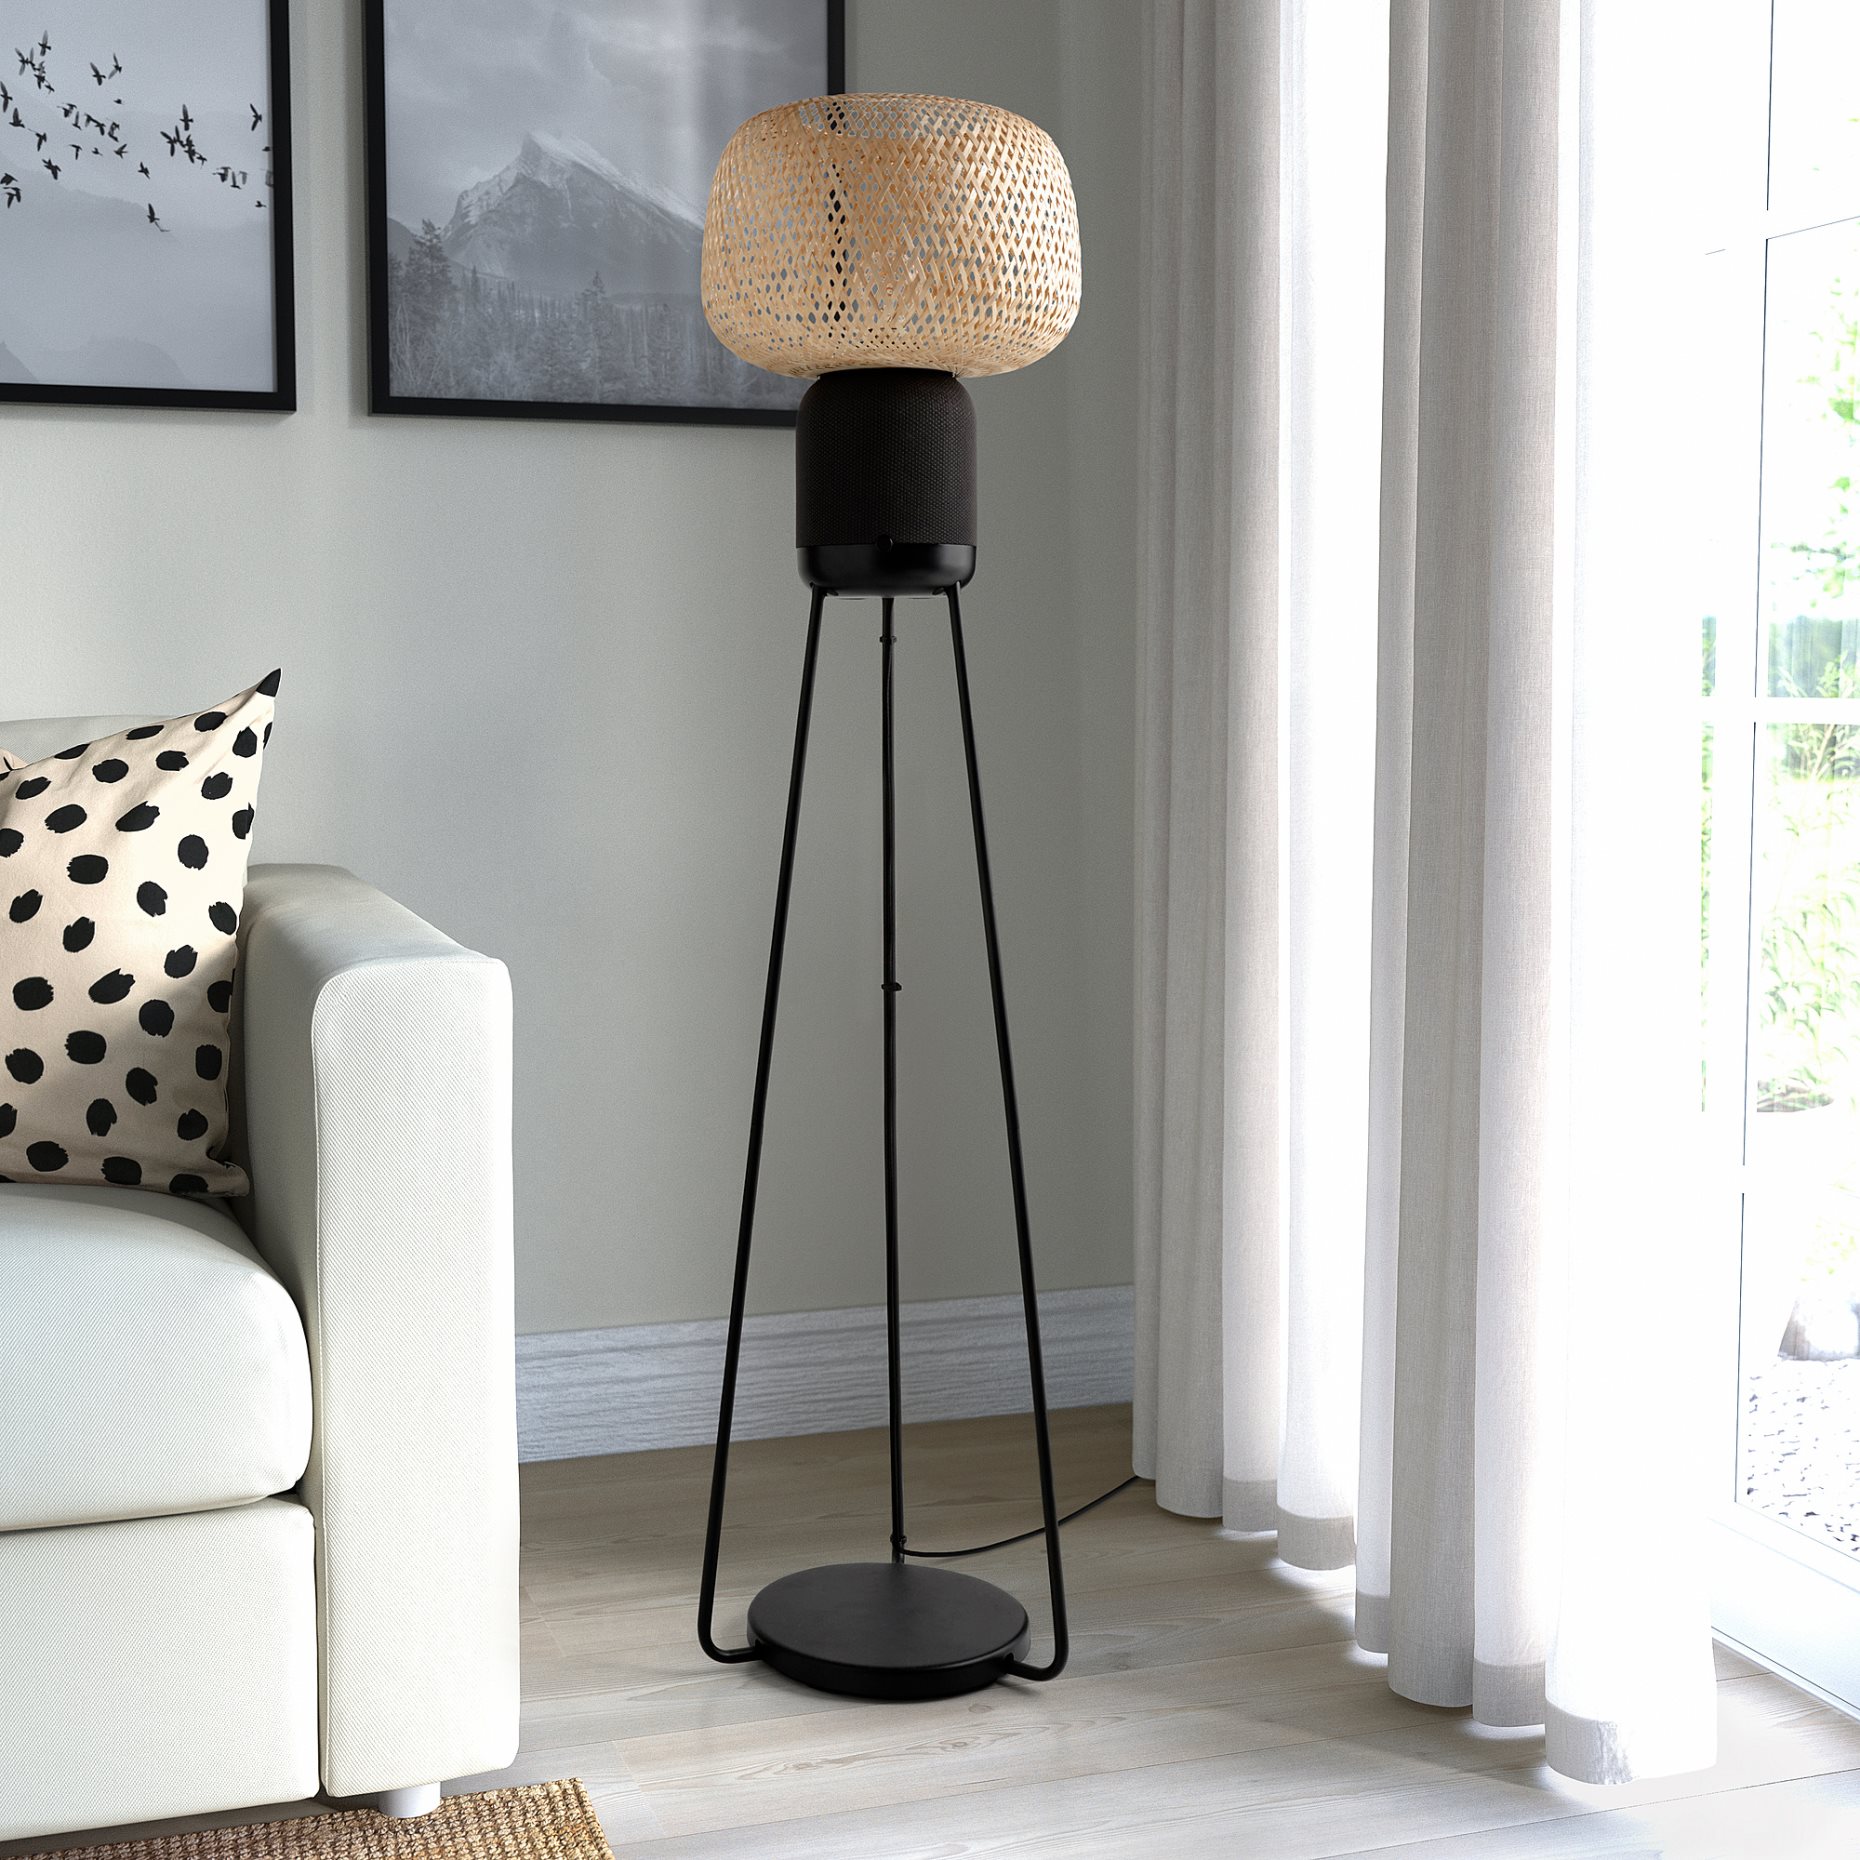 SYMFONISK, floor lamp with WiFi speaker/smart, 205.282.89